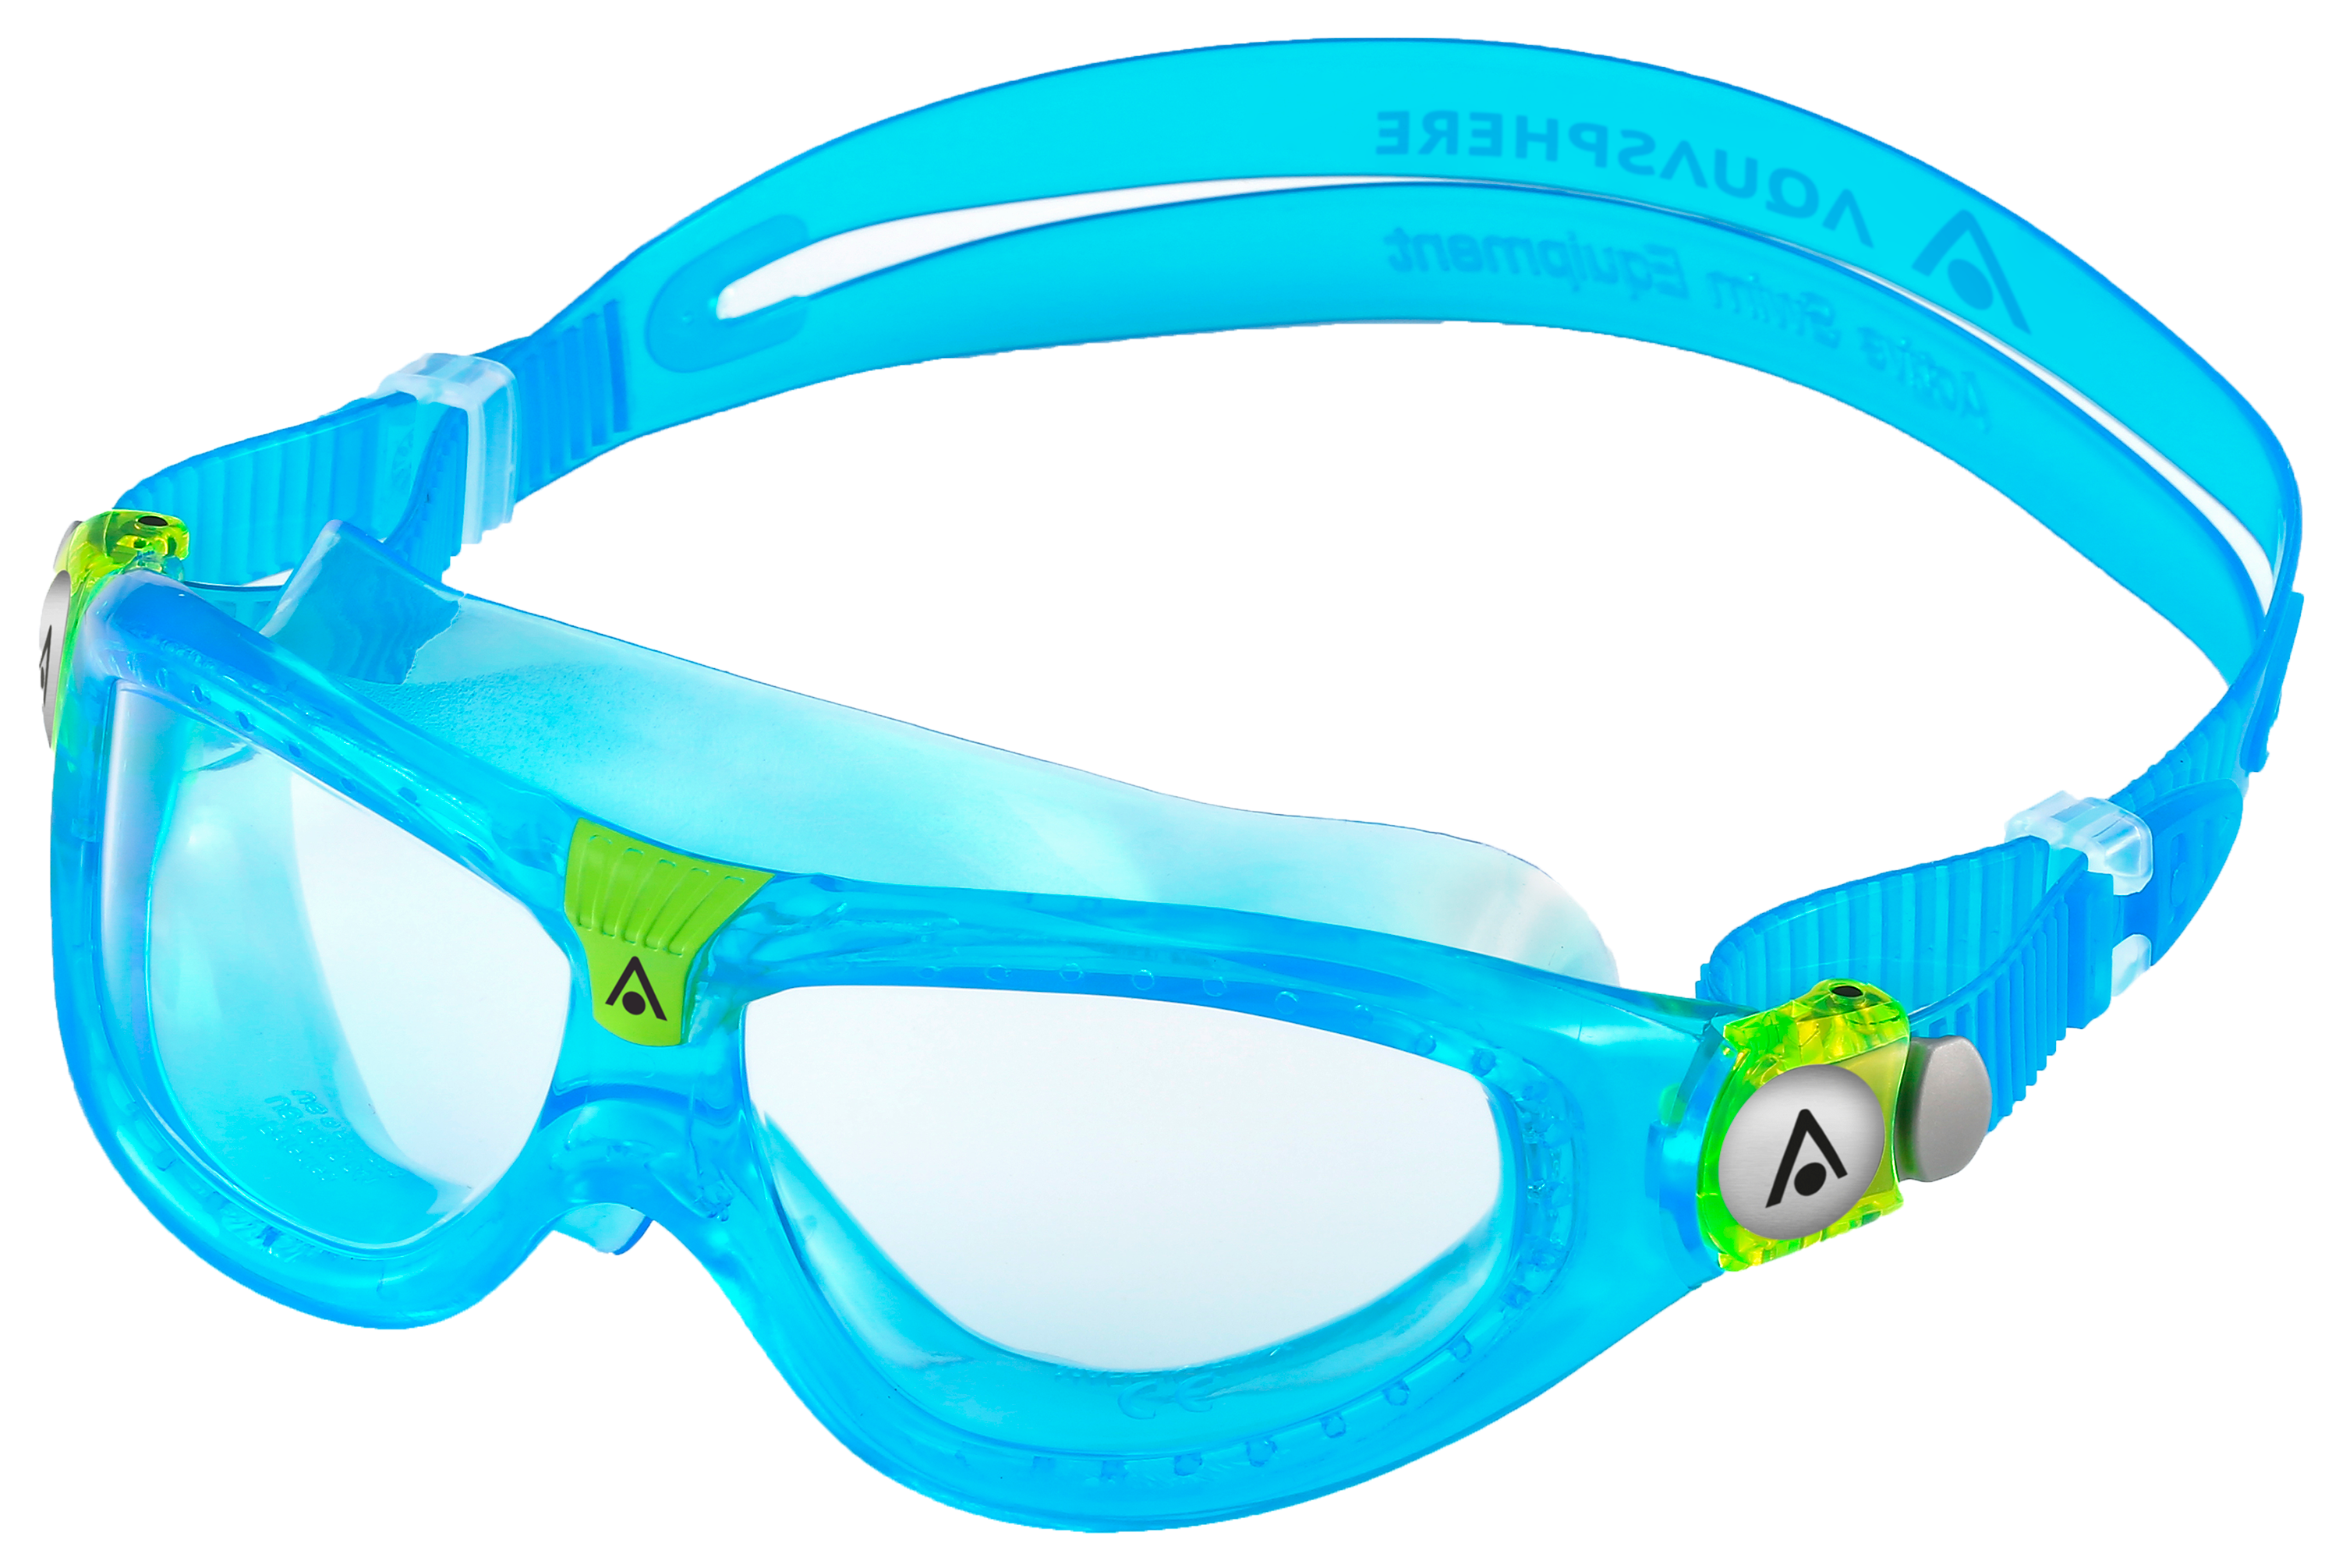 AquaSphere Seal 2 Swim Mask for Kids - Blue/Green